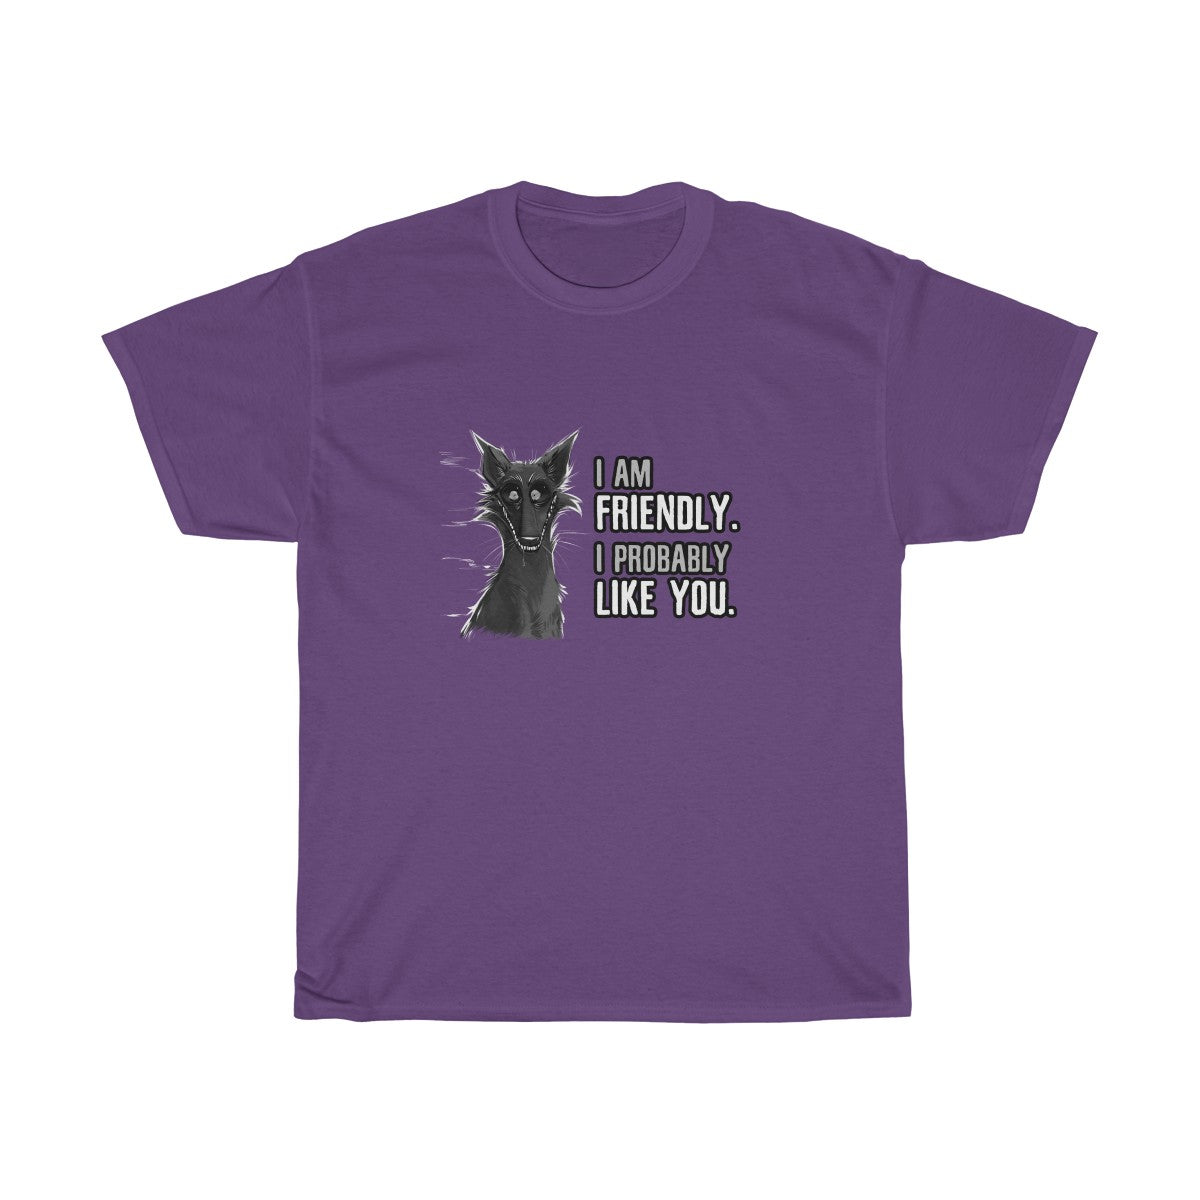 I probably DON'T hate you -T-Shirt T-Shirt Cyamallo Purple S 